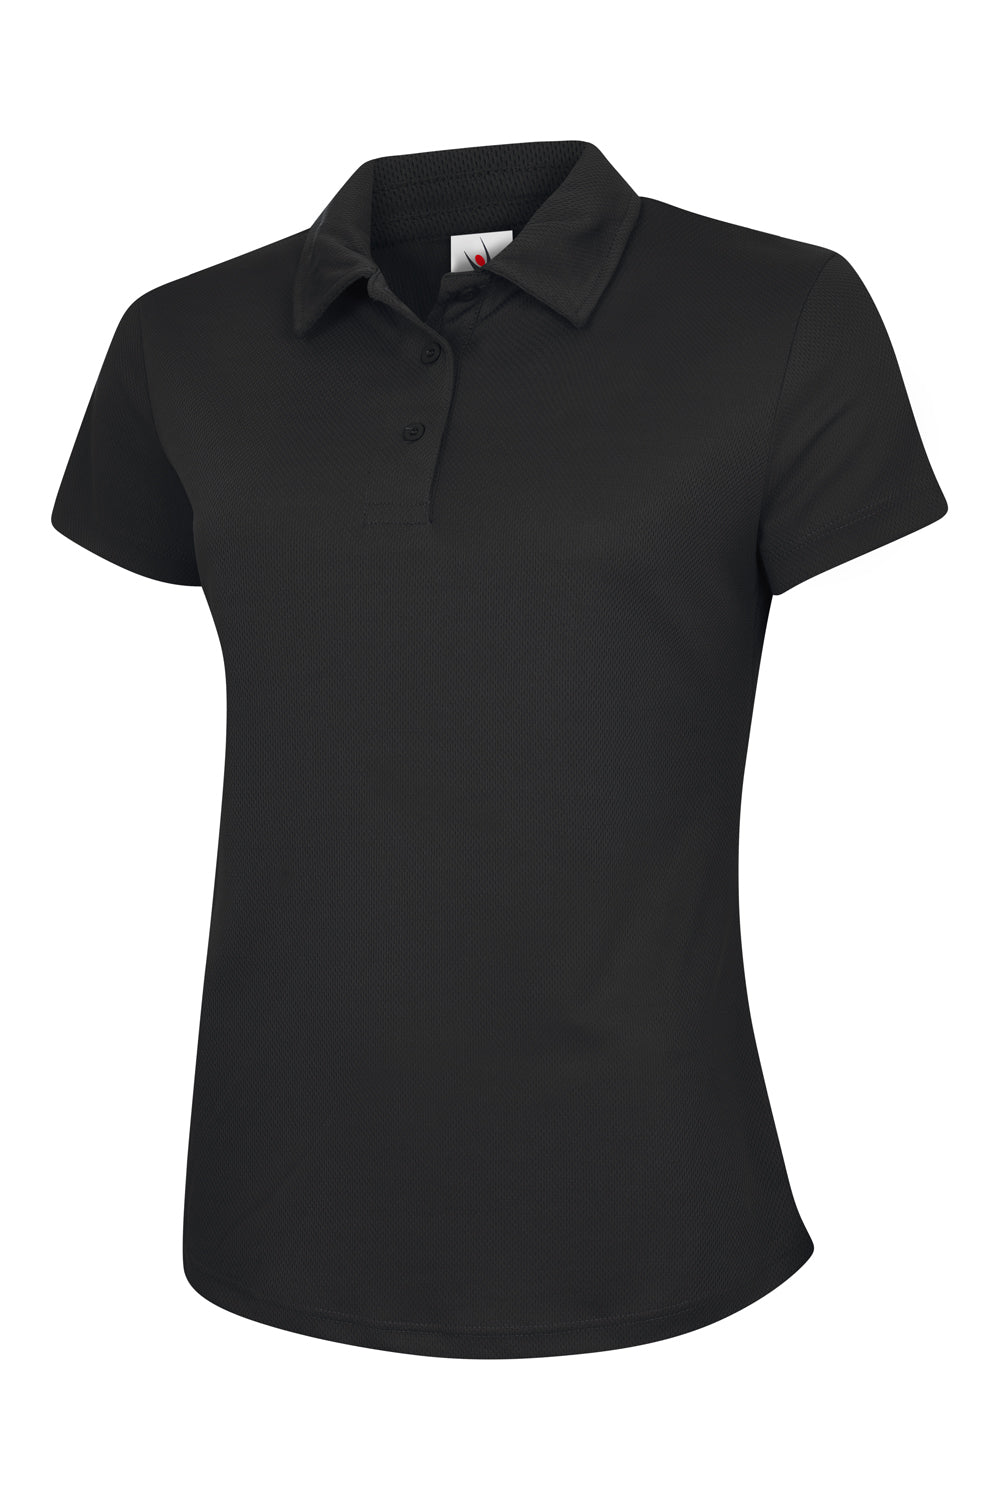 Uneek Ladies Ultra Cool Poloshirt UC126 - Black